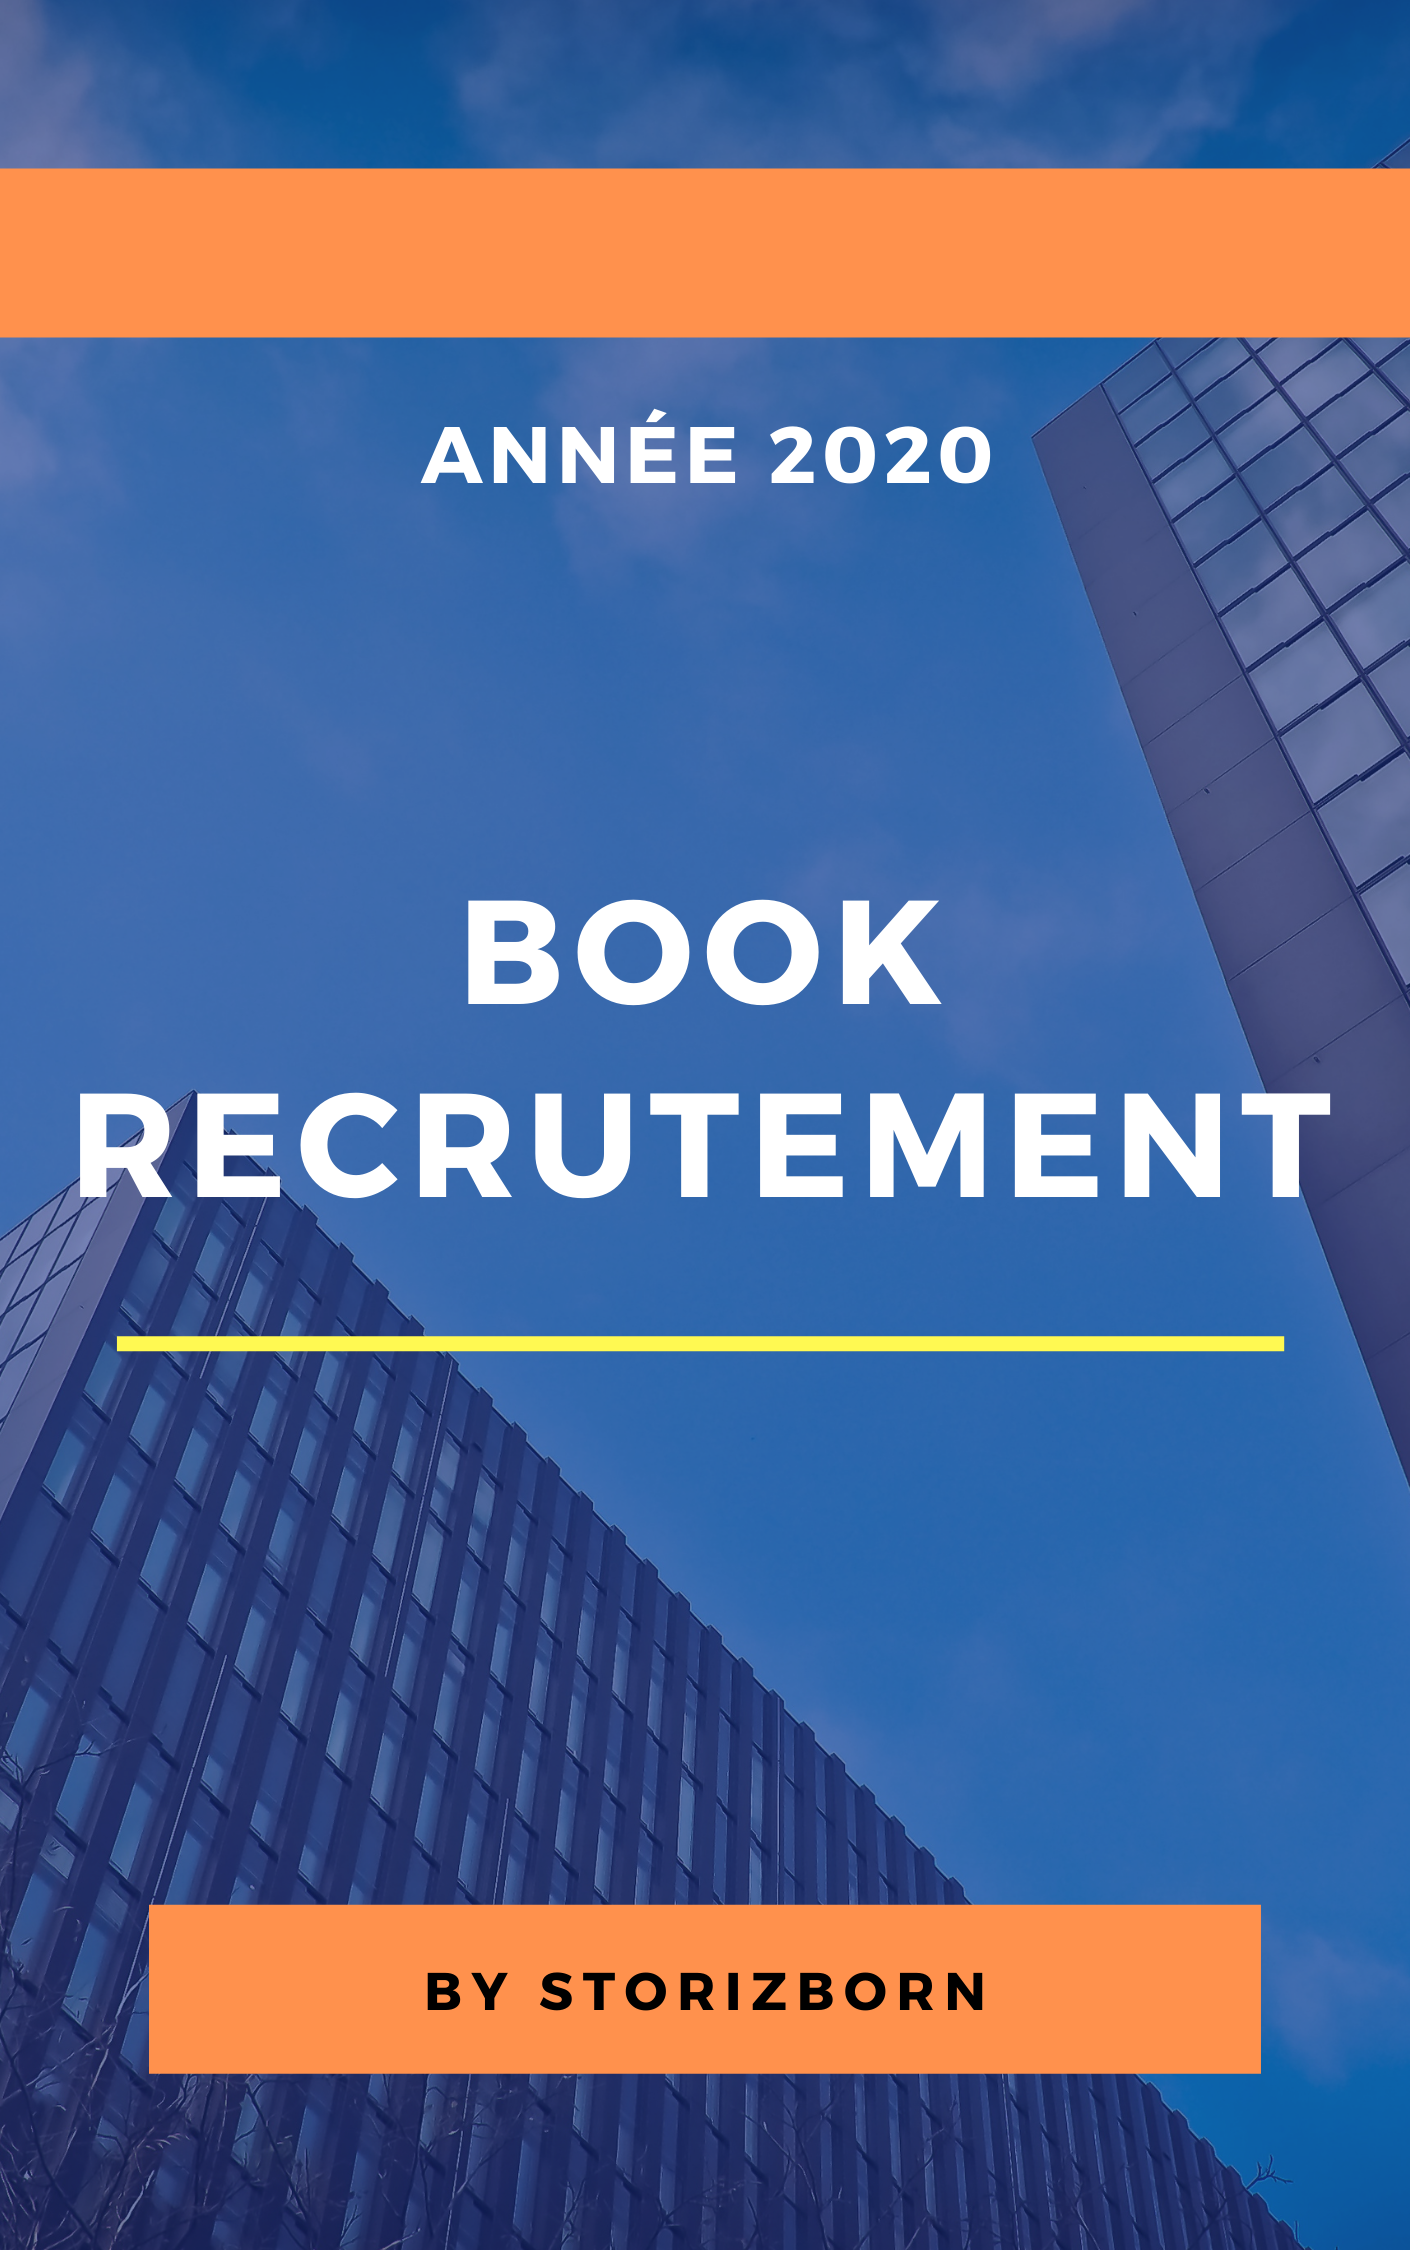 E-book recrutement 2020